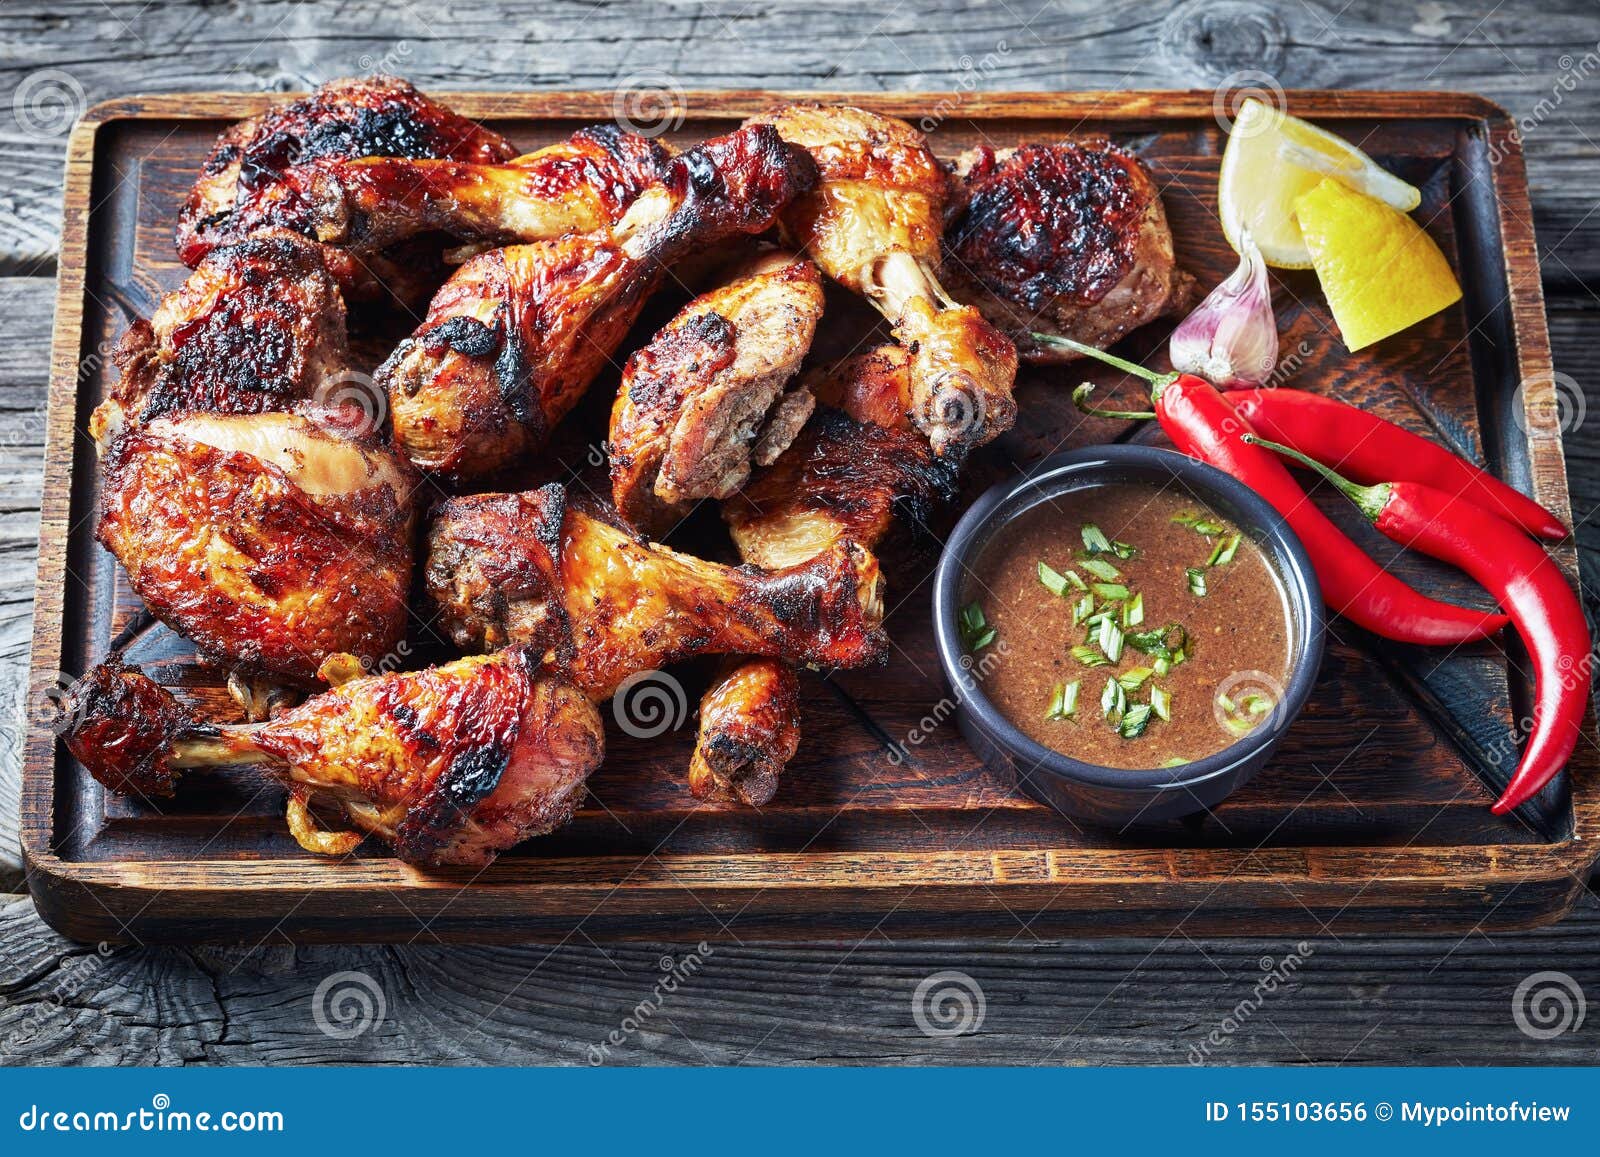 hot grilled jamaican jerk chicken on a board